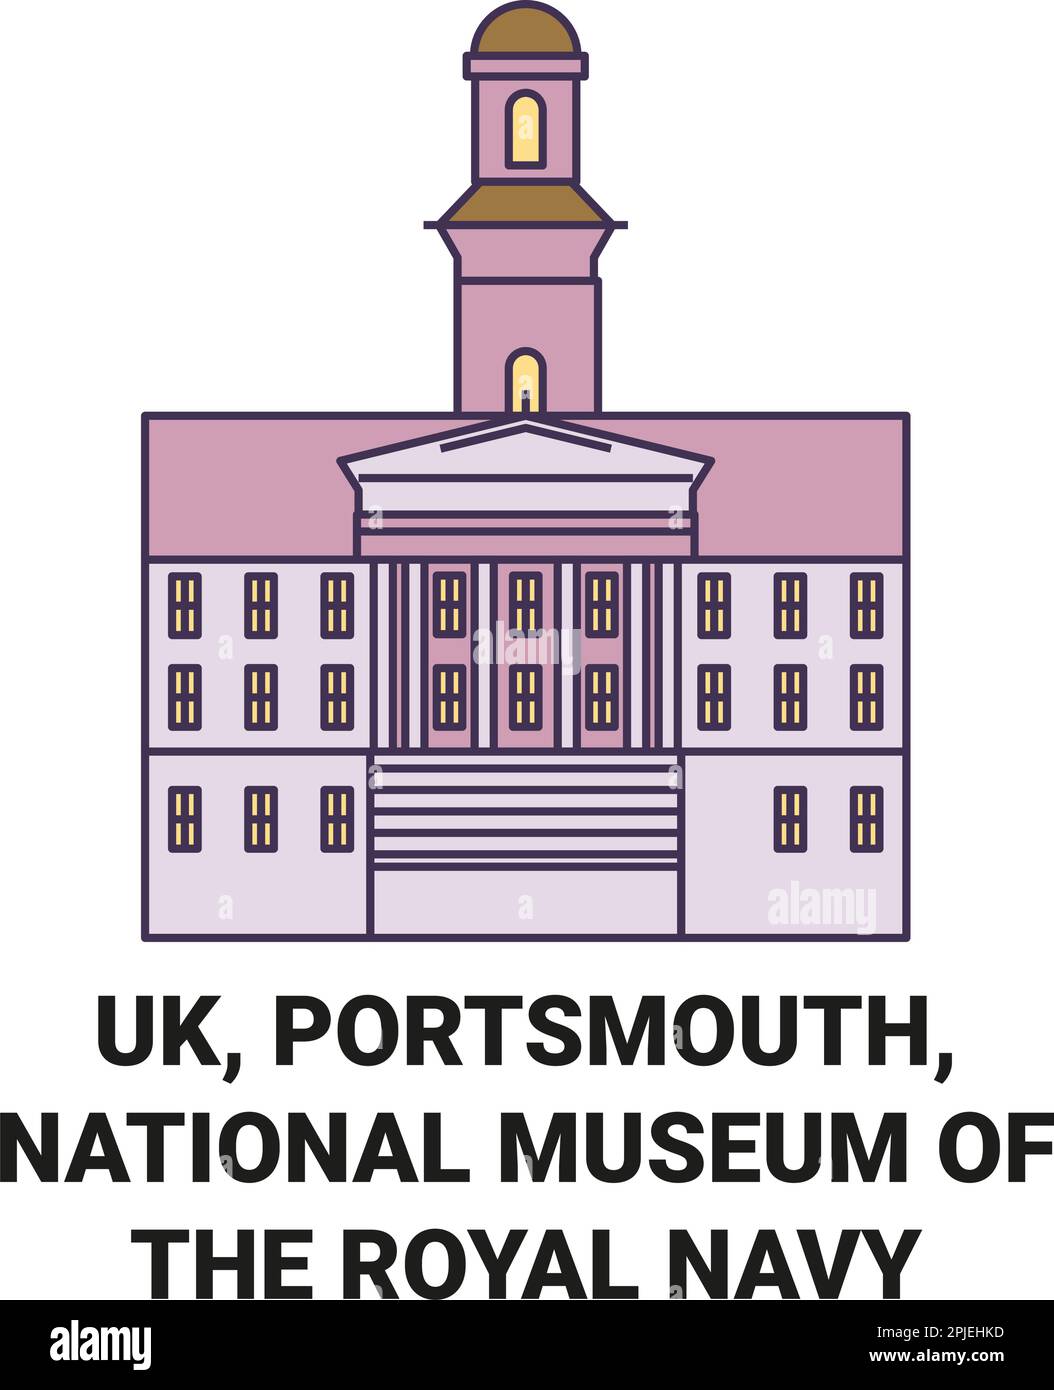 England, Portsmouth, National Museum Of The Royal Navy travel landmark vector illustration Stock Vector